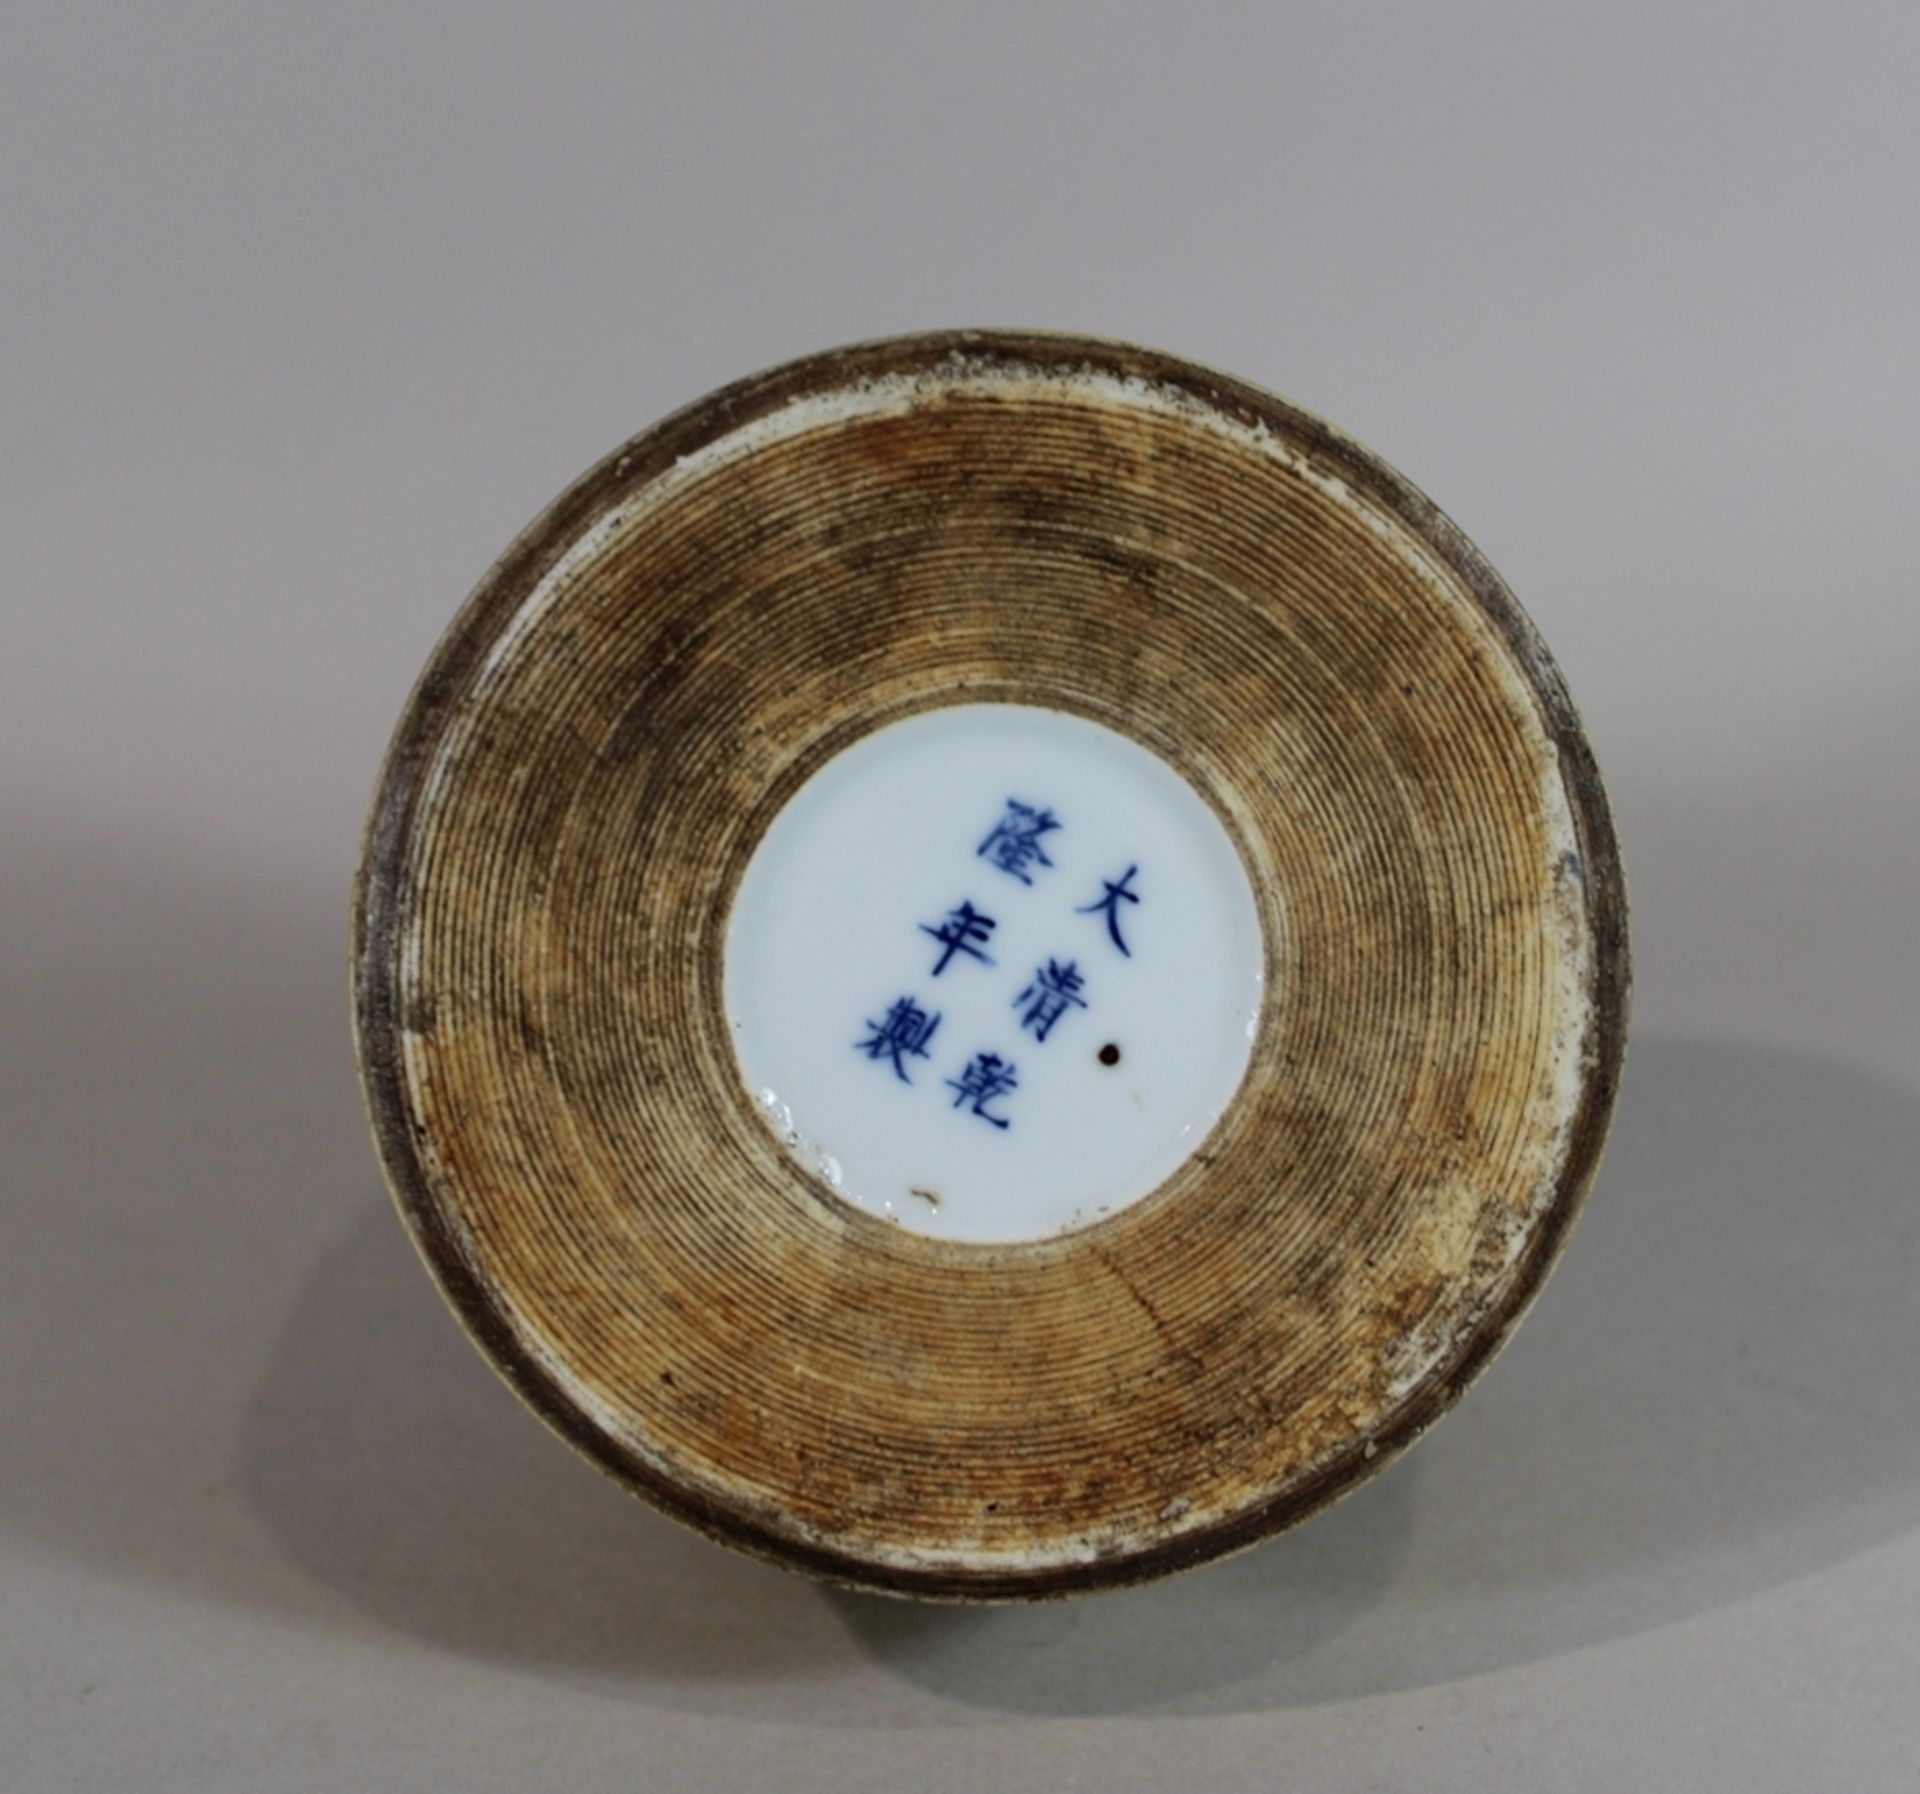 Yaolingzun (mallet) Vase, China, Porzellan, blaue Qianlong Sechszeichen Marke, gelb glasiert, Drach - Image 2 of 2